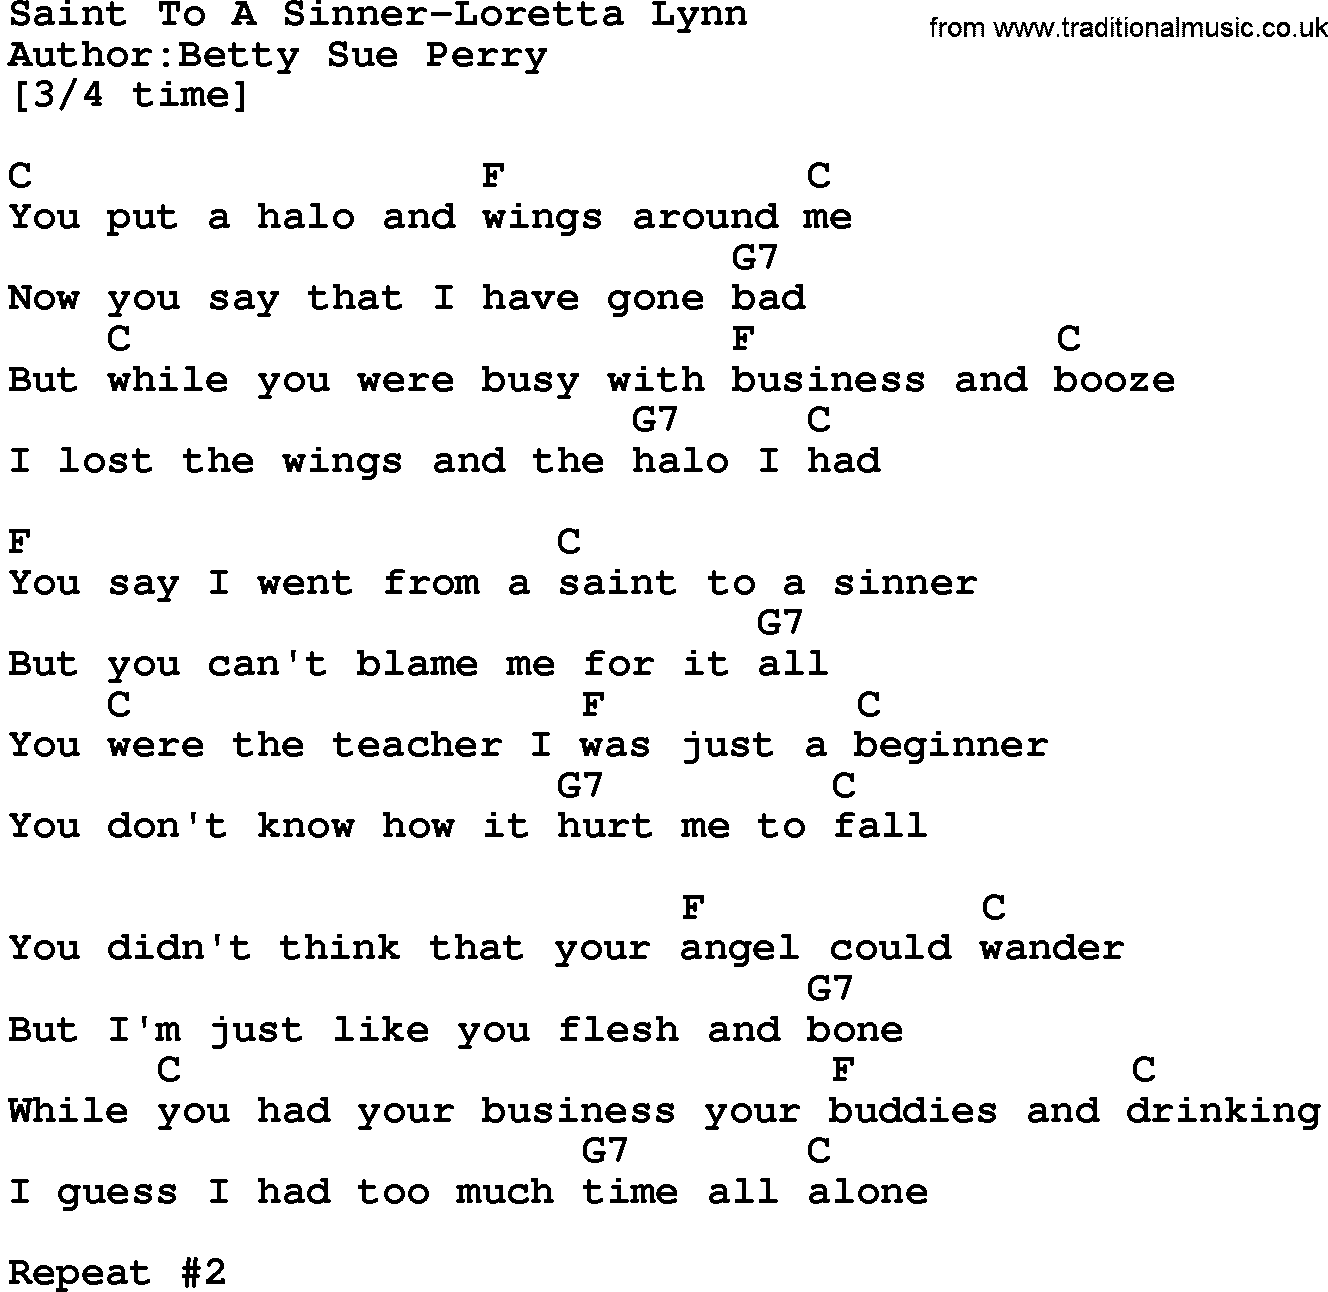 Country music song: Saint To A Sinner-Loretta Lynn lyrics and chords